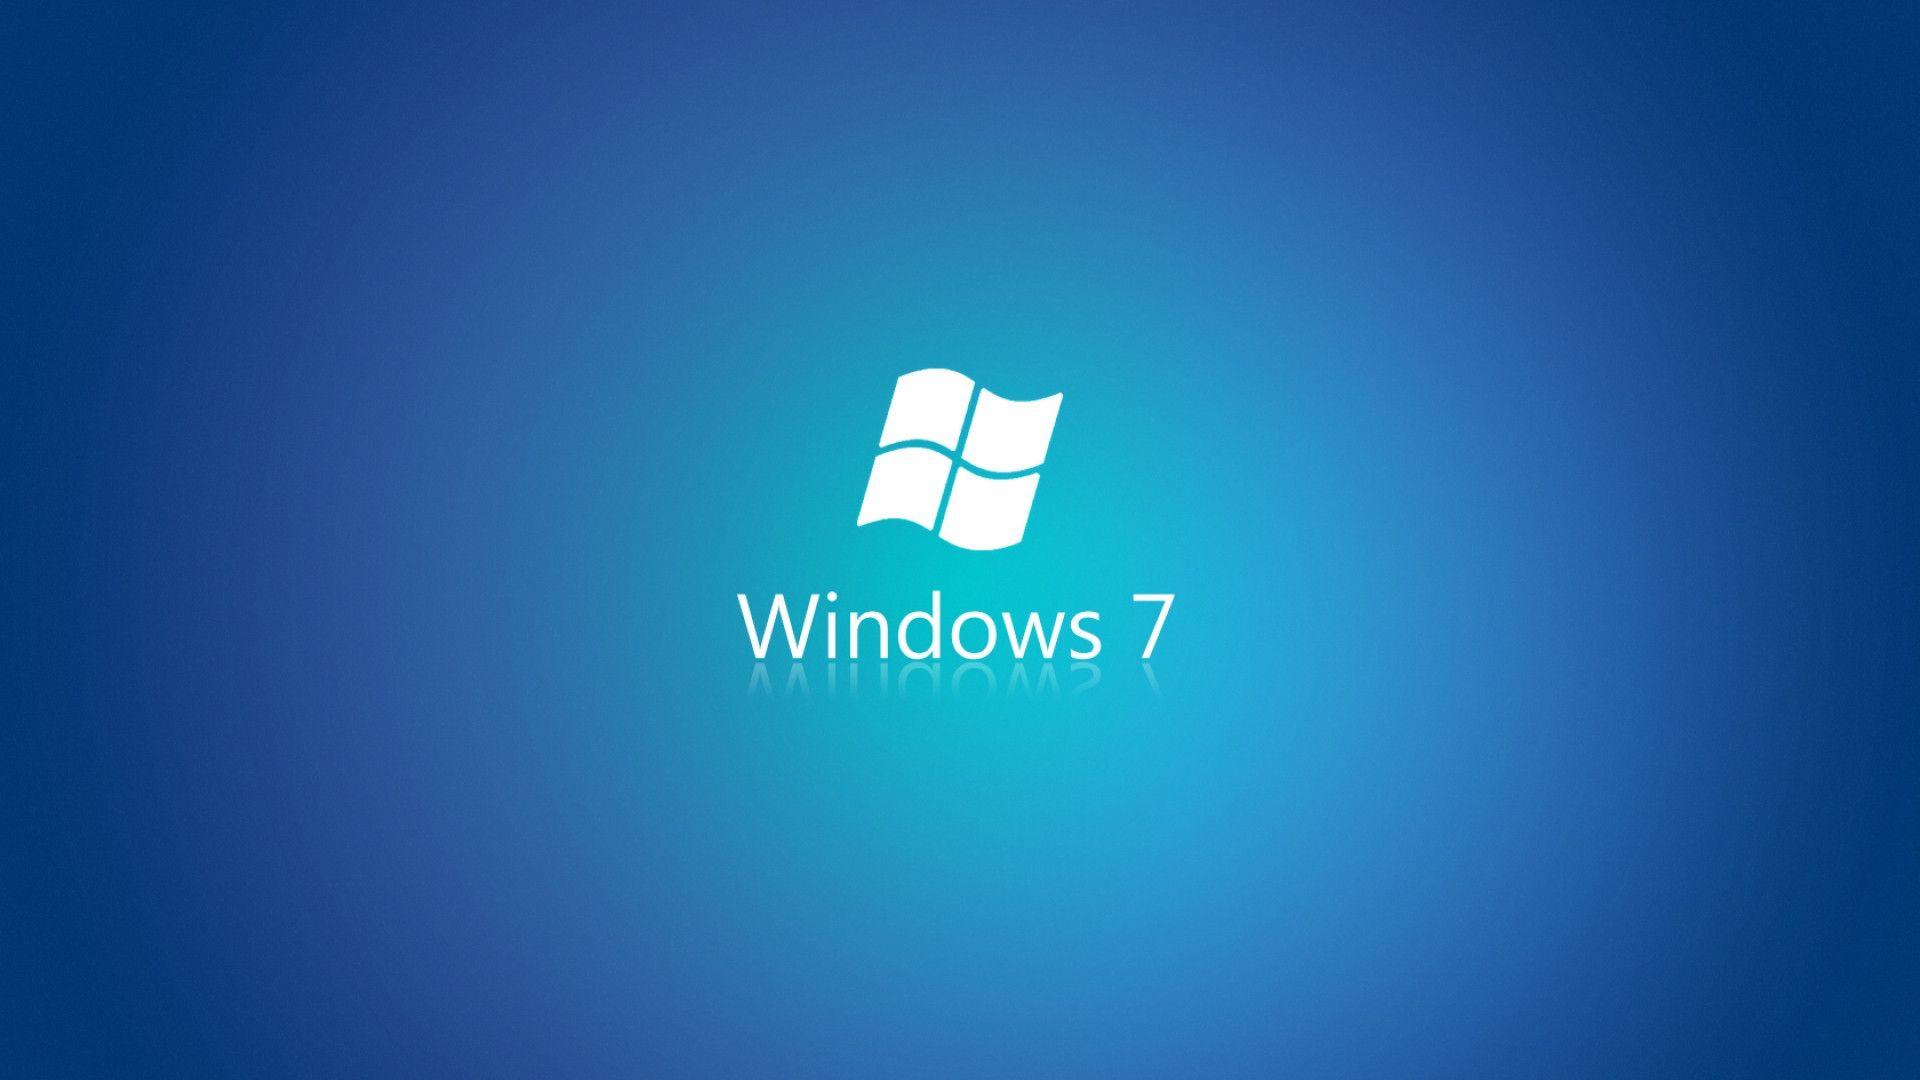 Windows 7 Logo Wallpapers Top Free Windows 7 Logo Backgrounds Wallpaperaccess